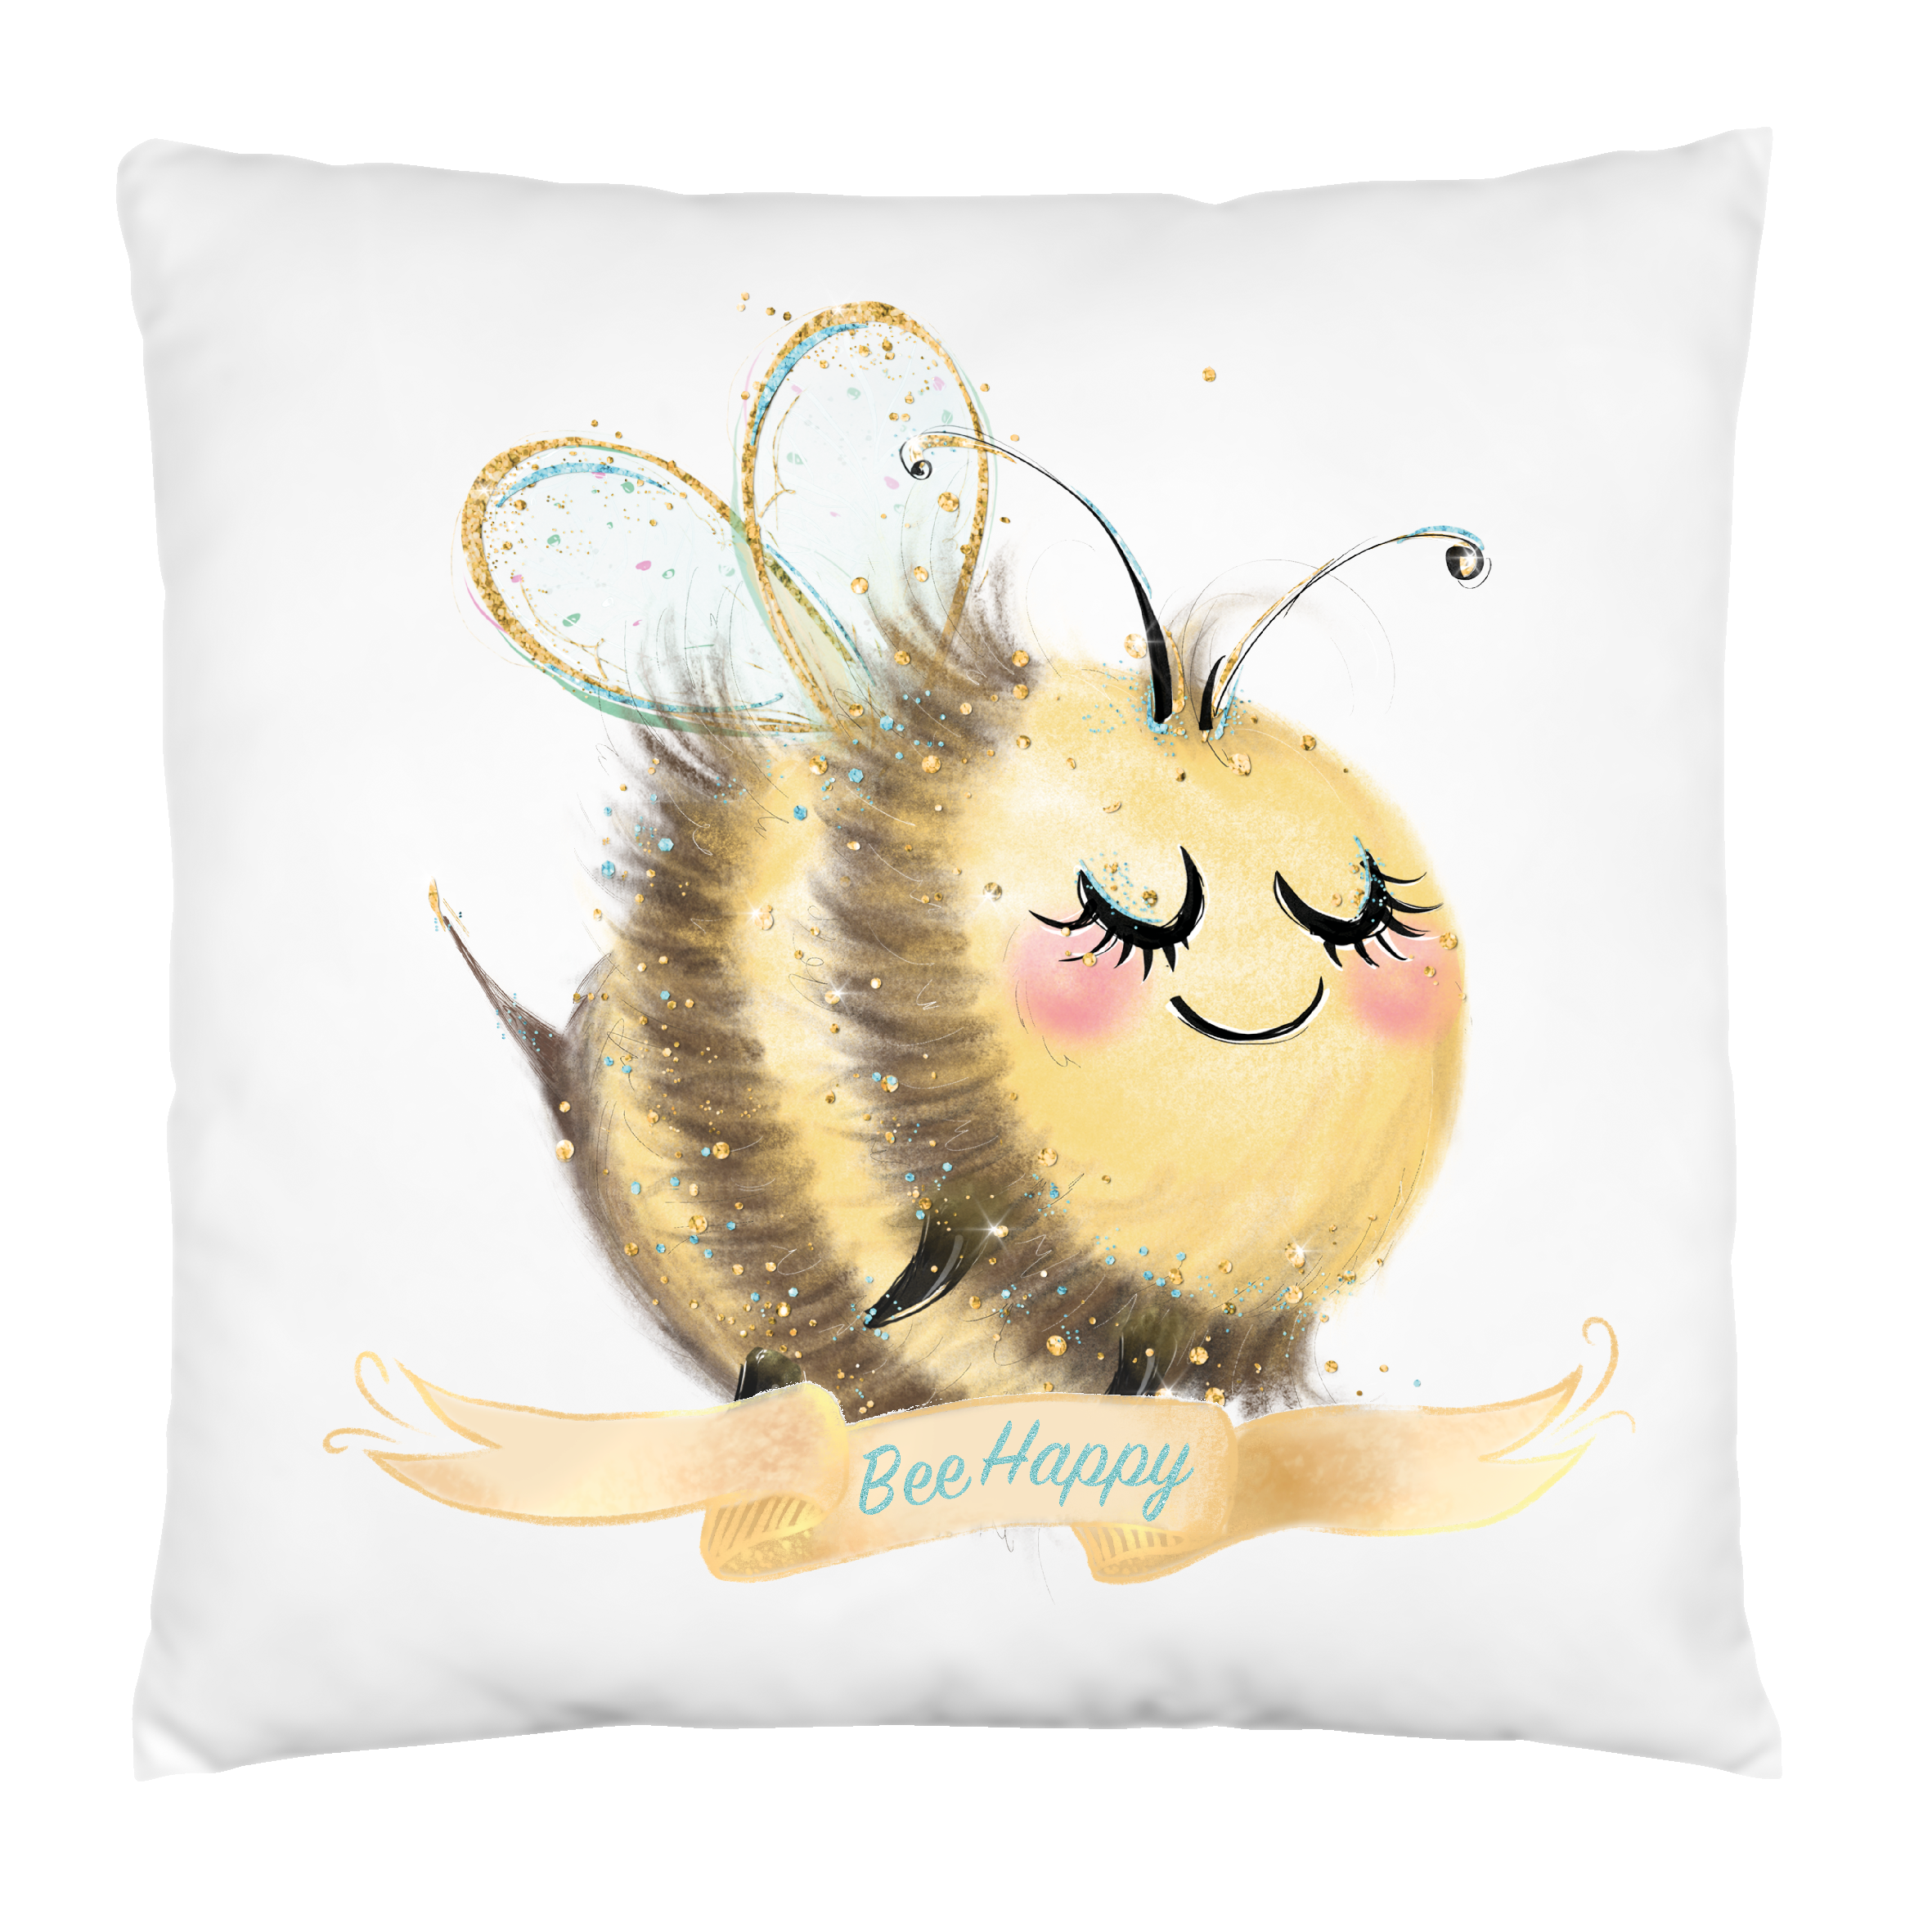 Bee Happy Cushion,Bee Cushion,Pillow,Throw,Bee Gift,Home Decor,Home Interiors